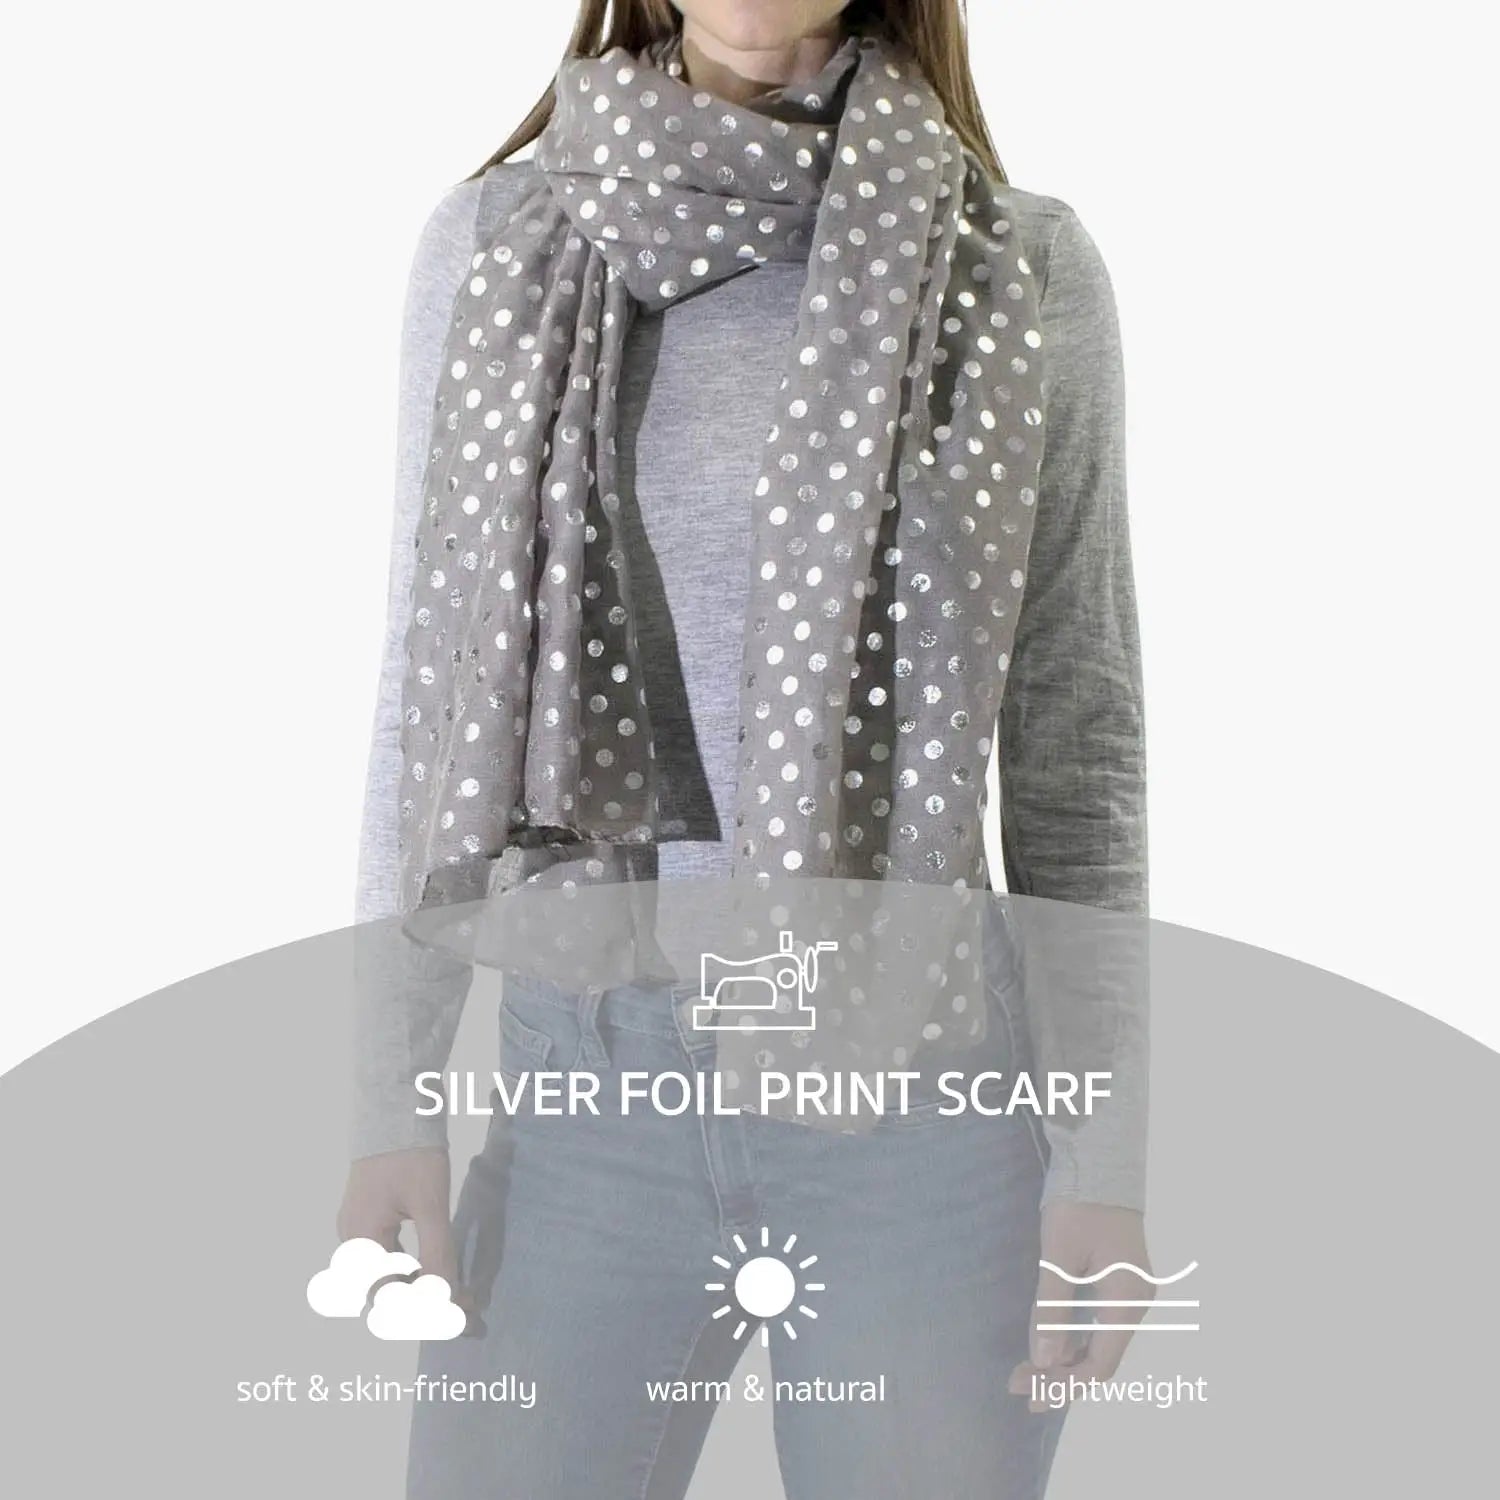 A woman wearing a gray polka dot silver foil oversized scarf